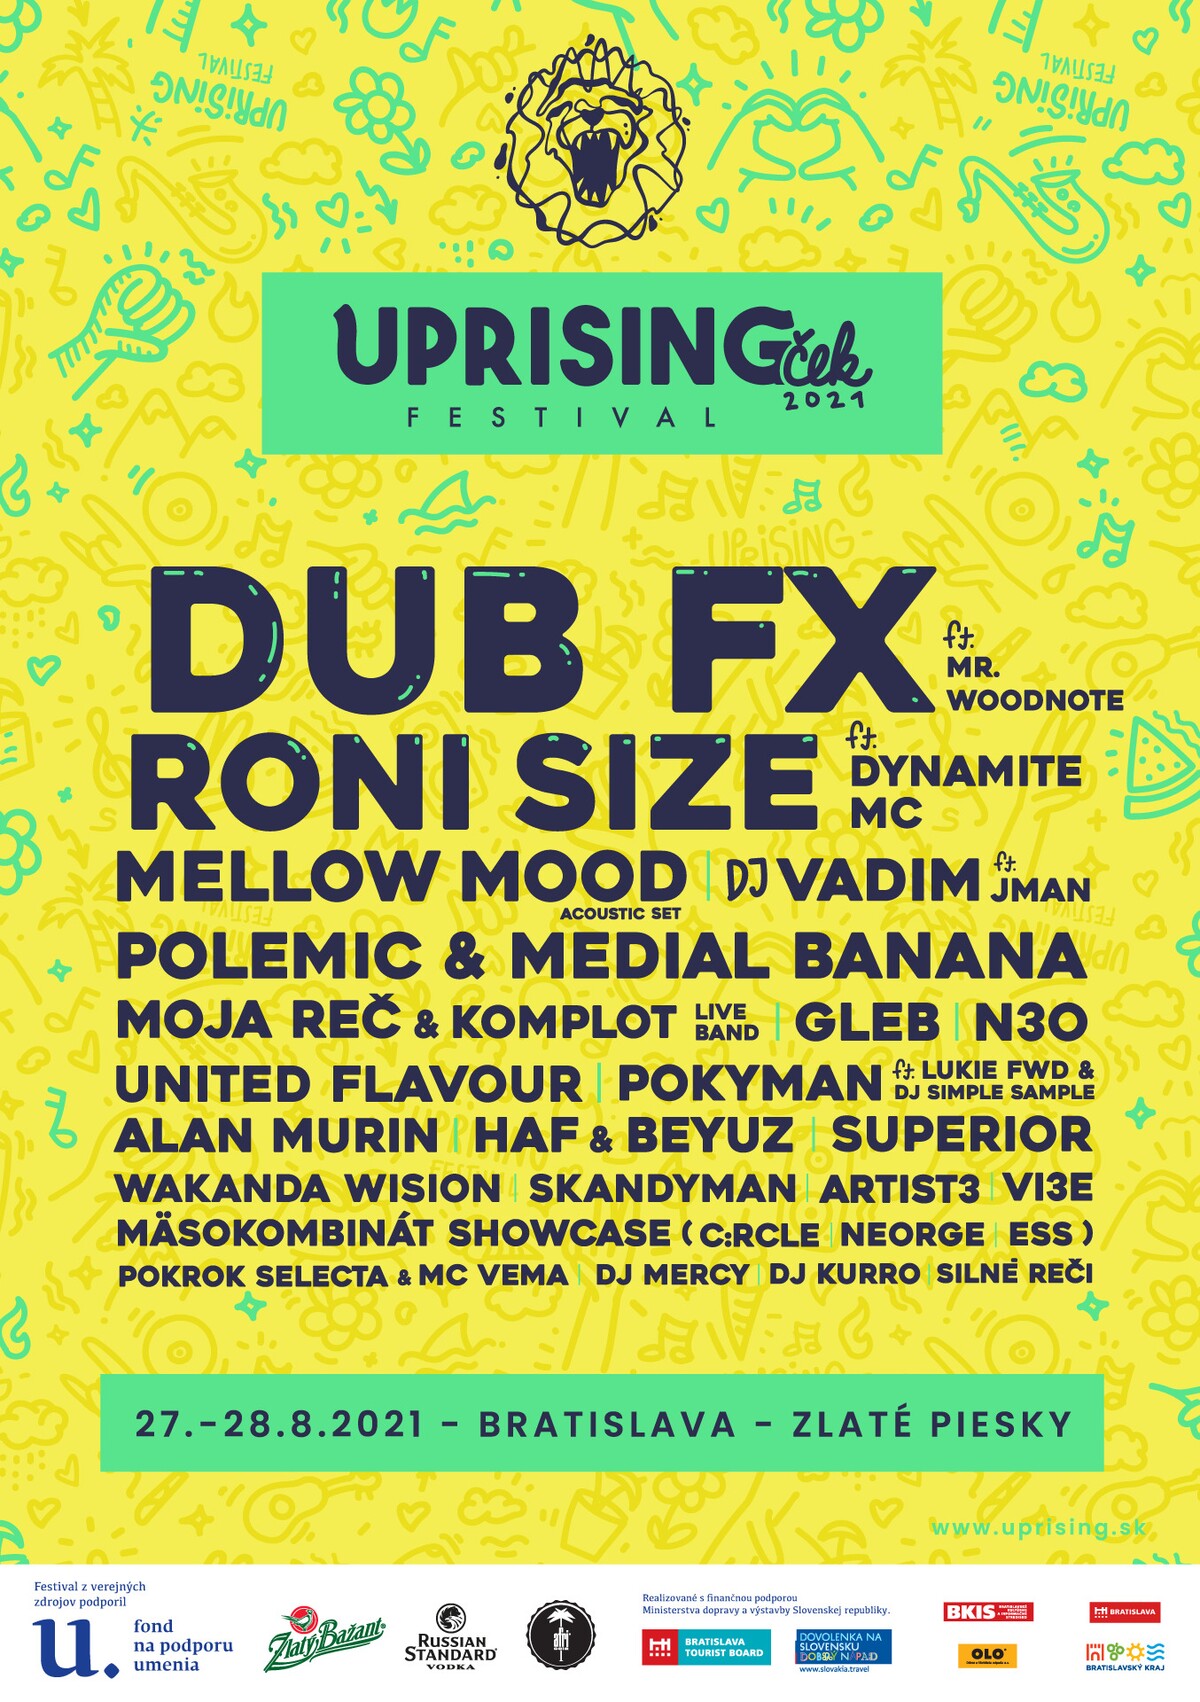 Uprising Festival